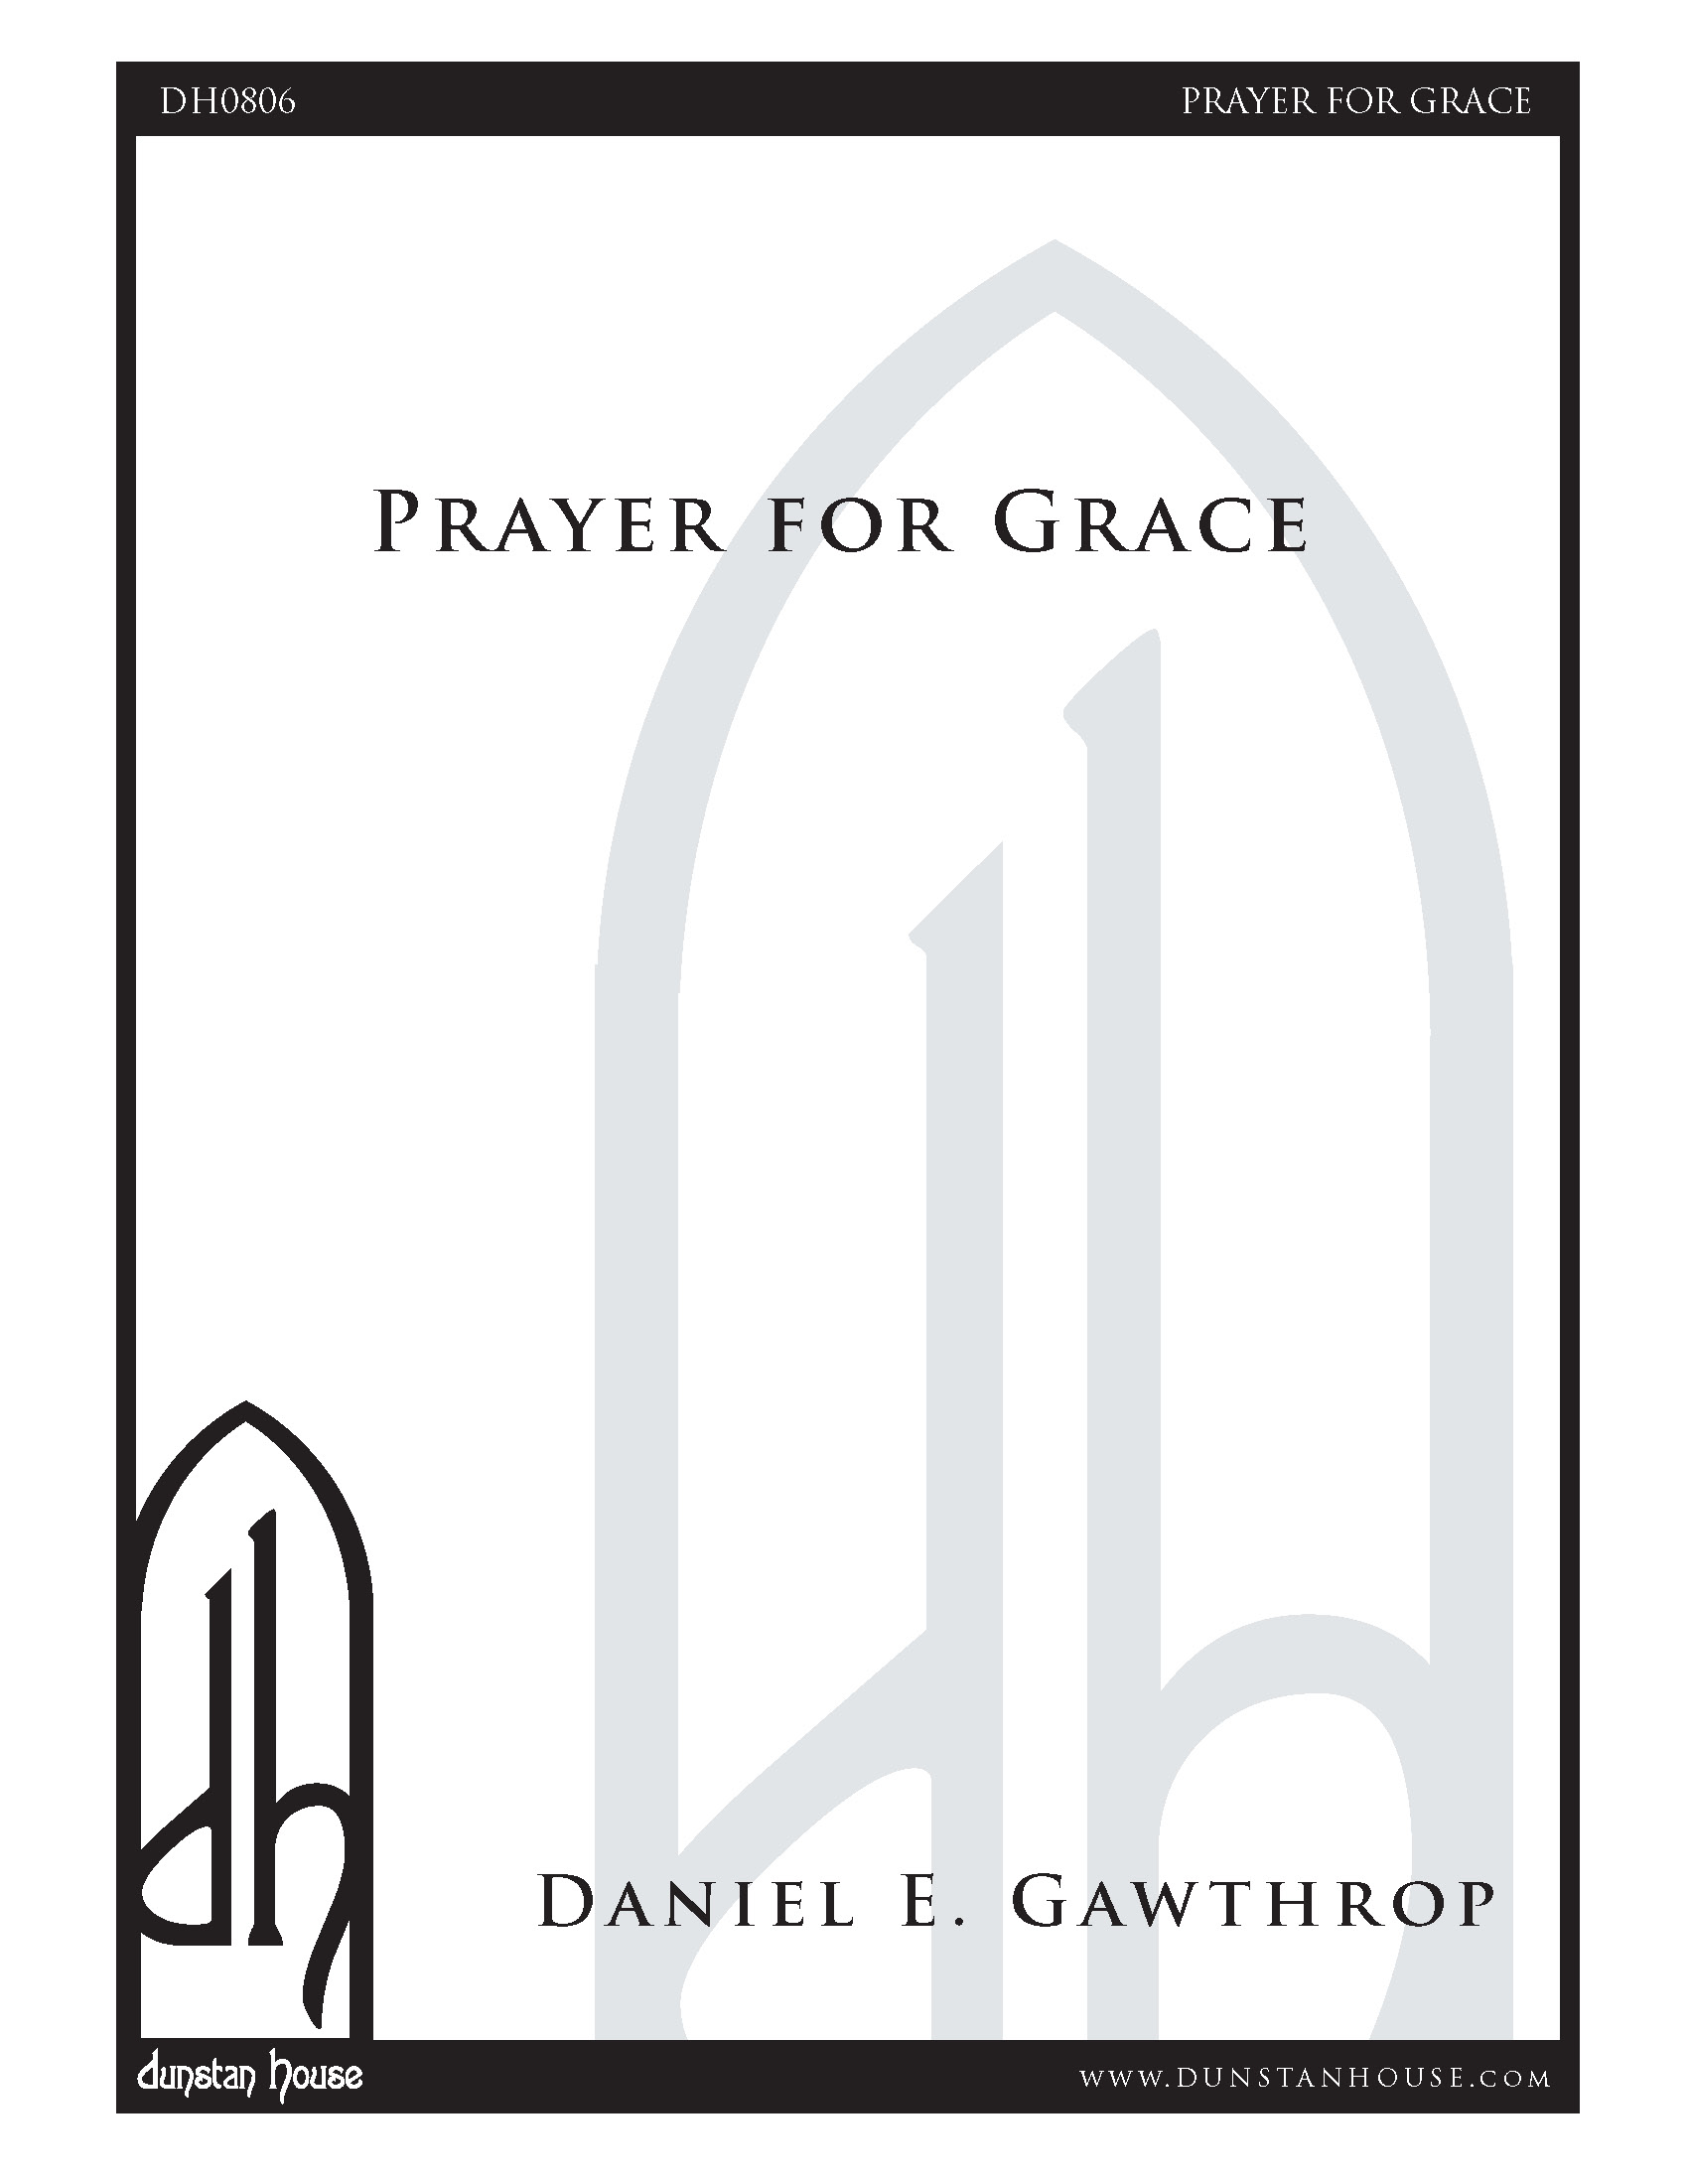 Prayer for Grace for SSAATTBB, a cappella